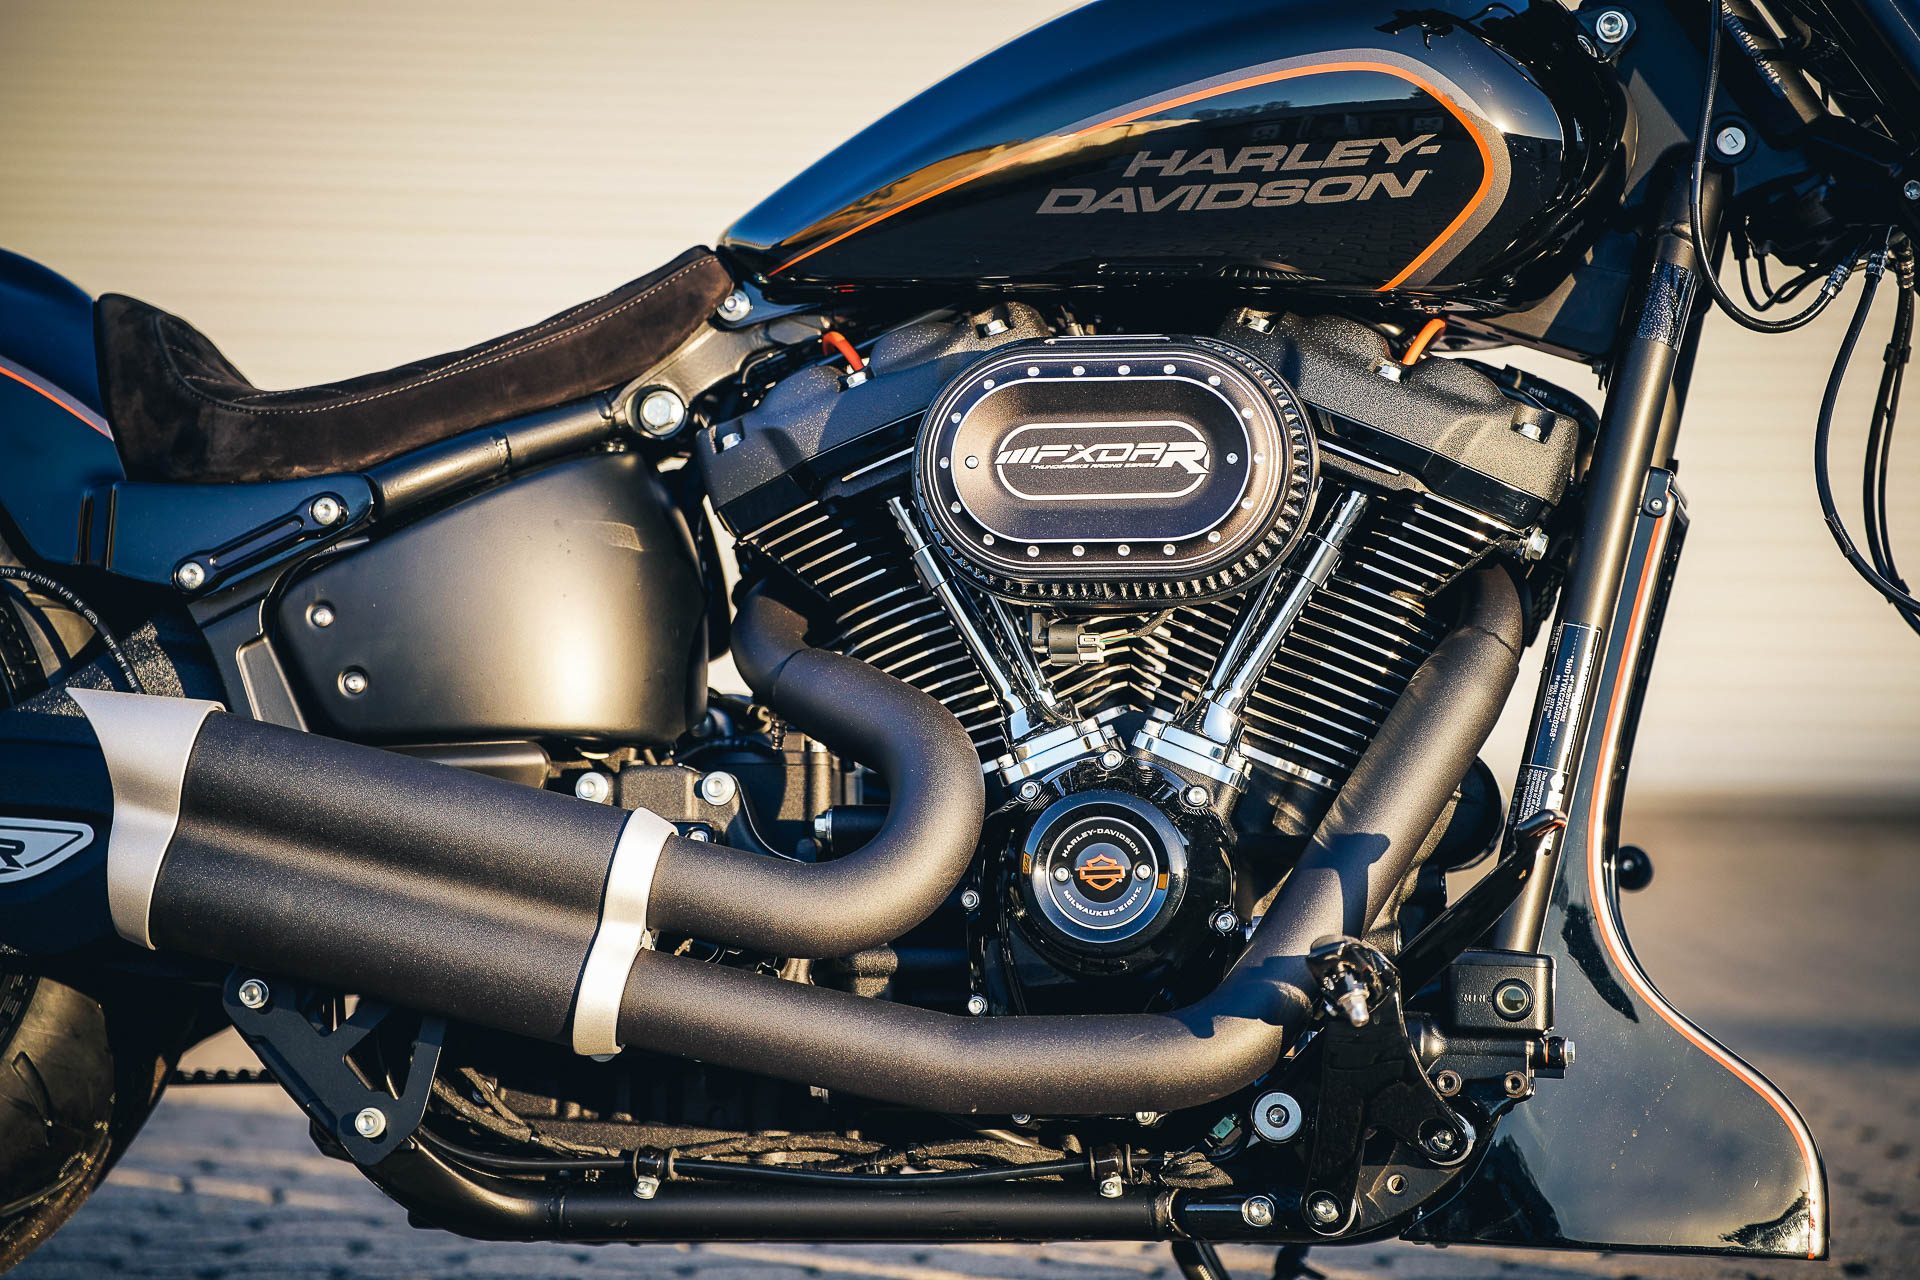 https://www.thunderbike.com/wp-content/uploads/2018/11/Thunderbike-Harley-Davidson-Destruction-43-1920x1280.jpg